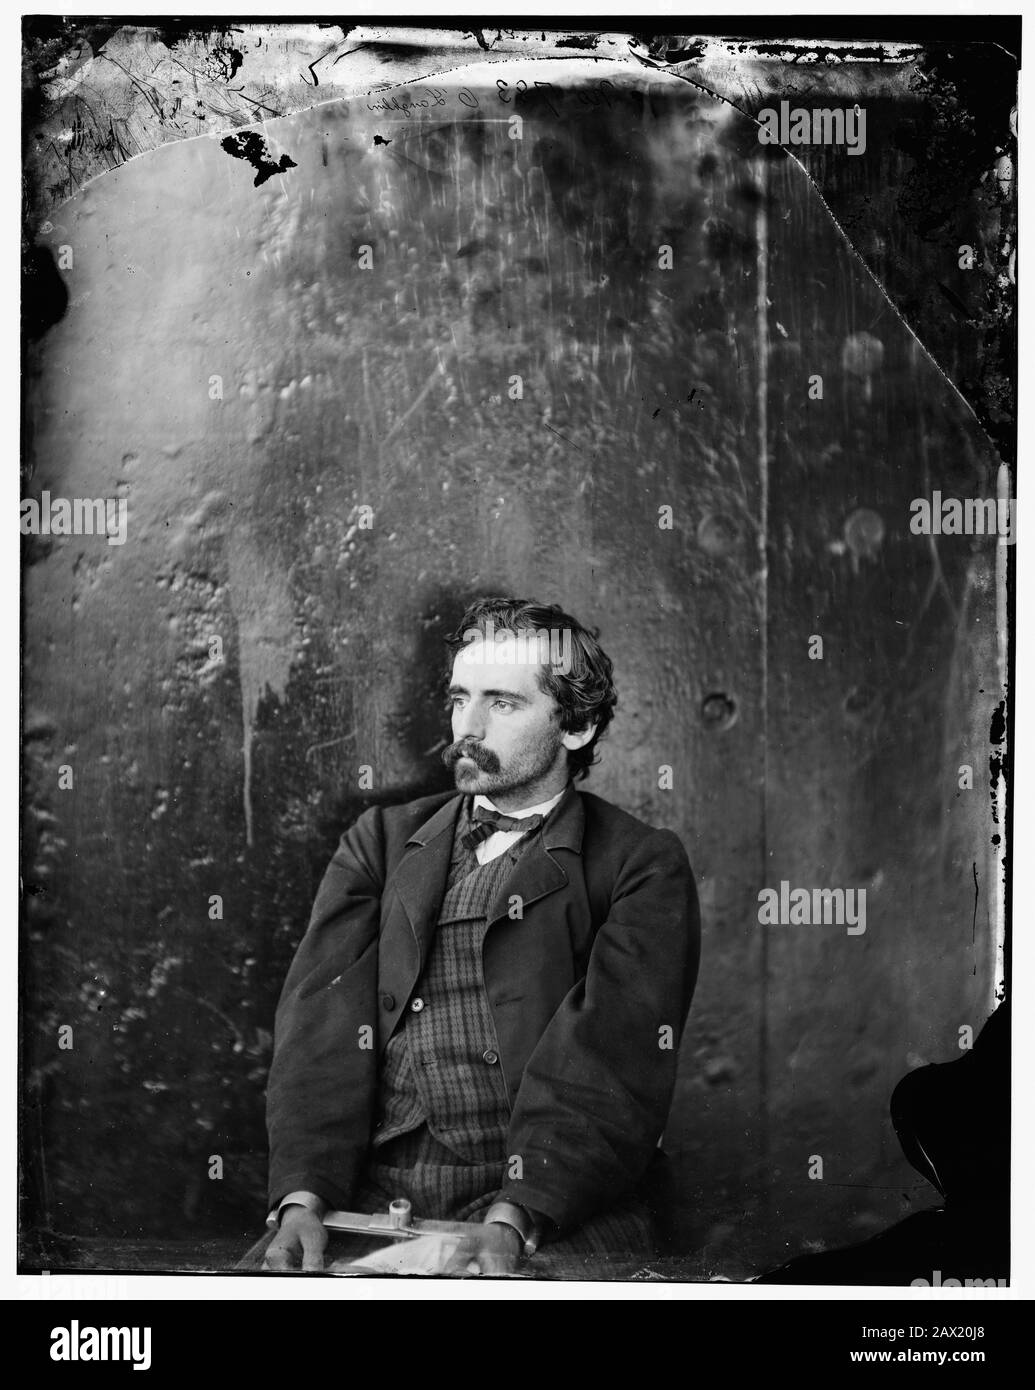 1865, Washington Navy Yard, D.C., EE.UU. : Asesinato del Presidente Lincoln. Michael o'Laughlin , un conspirador, en sombrero y manacled . Foto de Alexander GARDNER ( 1821 - 1882 ). El Presidente de los Estados Unidos ABRAHAM LINCOLN ( 1809 - 1865 ). - Presidente della Repubblica - Stati Uniti - USA - ritratto - retrato - Abramo - COSPIRATOR - COSPIRATORE - COSPIRAZIONE - condiannato a morte - tie - cravatta - manette - bigote - baffi ----- Archivio GBB Foto de stock